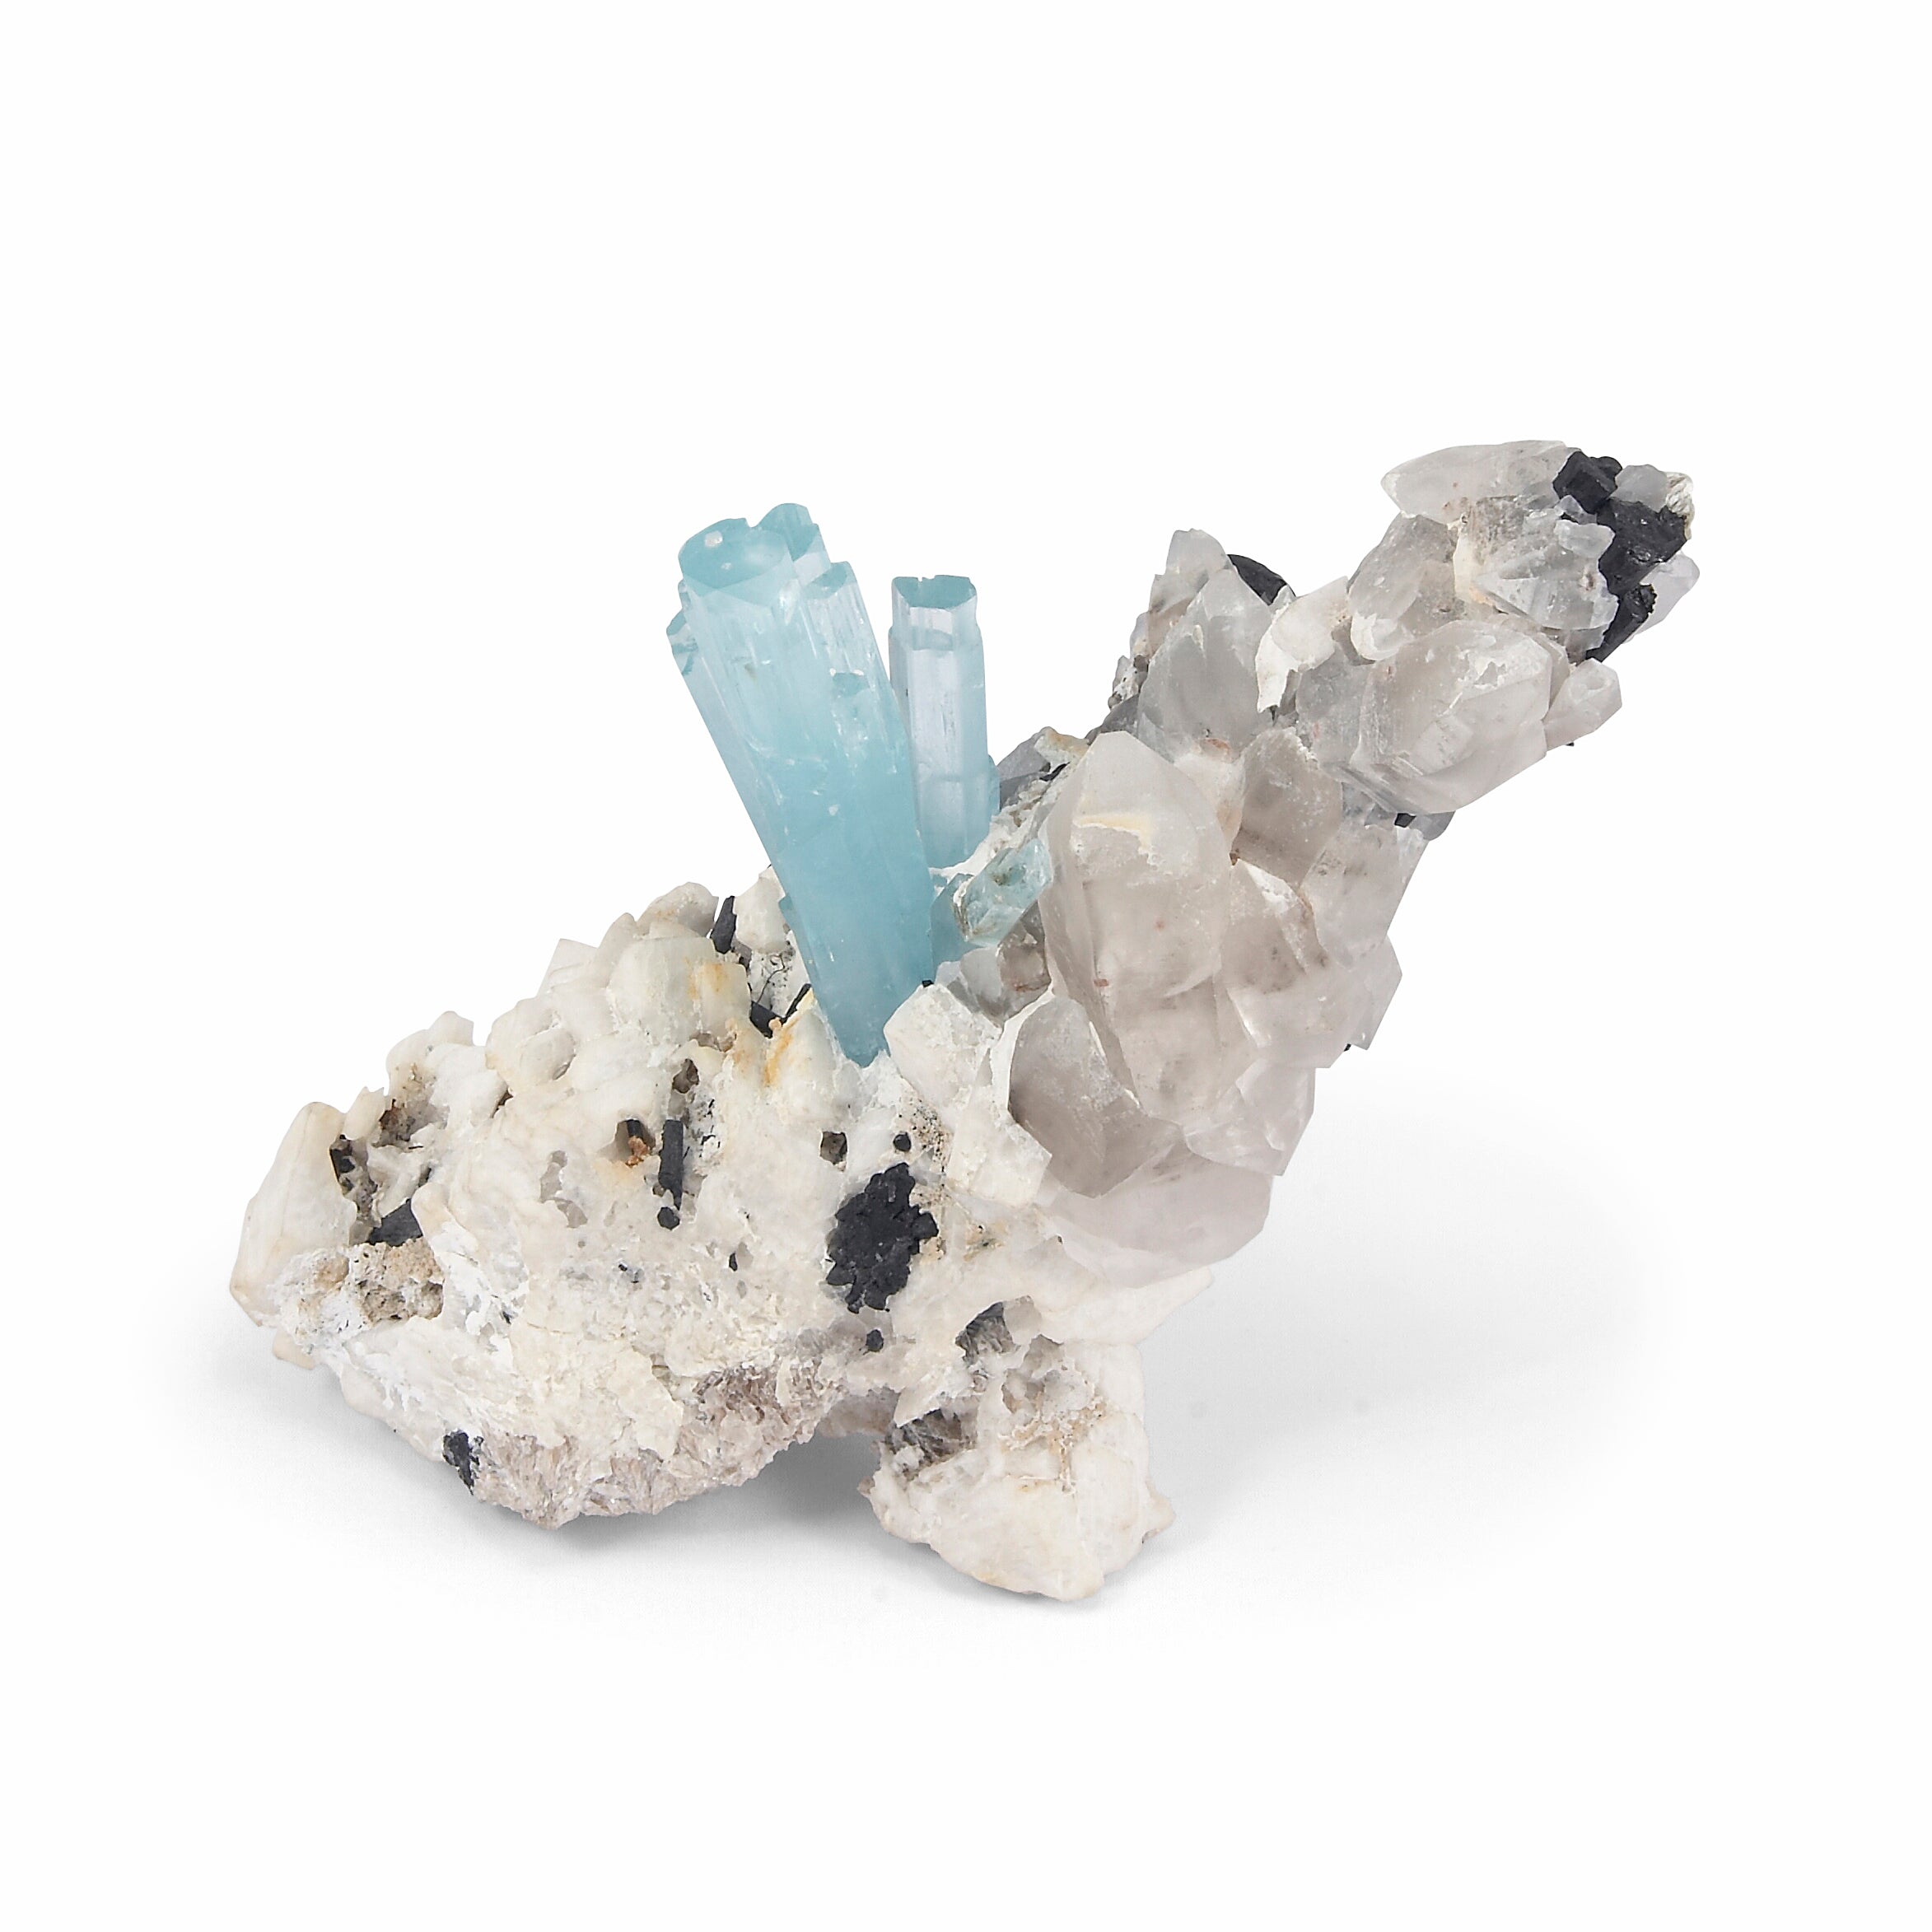 Aquamarine Spray 6.5 inch 2.23 lbs Natural Gem Crystal with Quartz and Black Tourmaline - MSCON-128 - Crystalarium